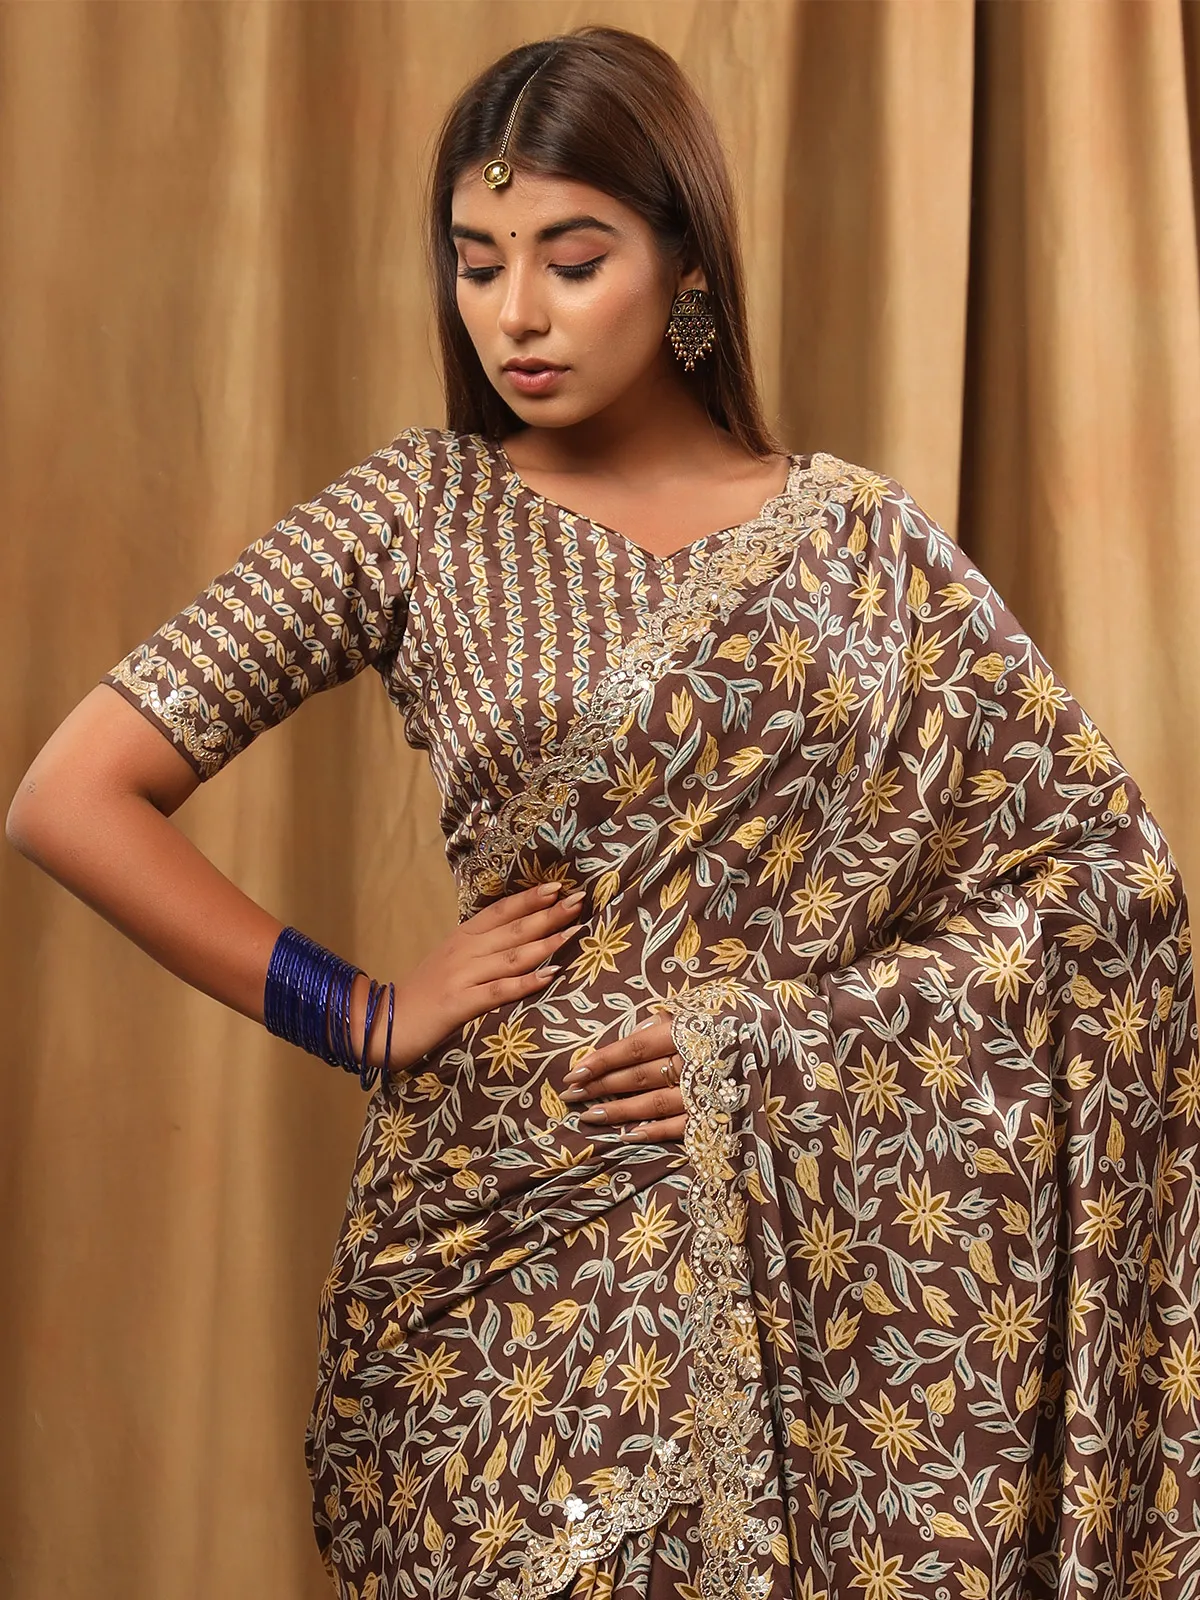 Beautiful brown printed satin saree for festive